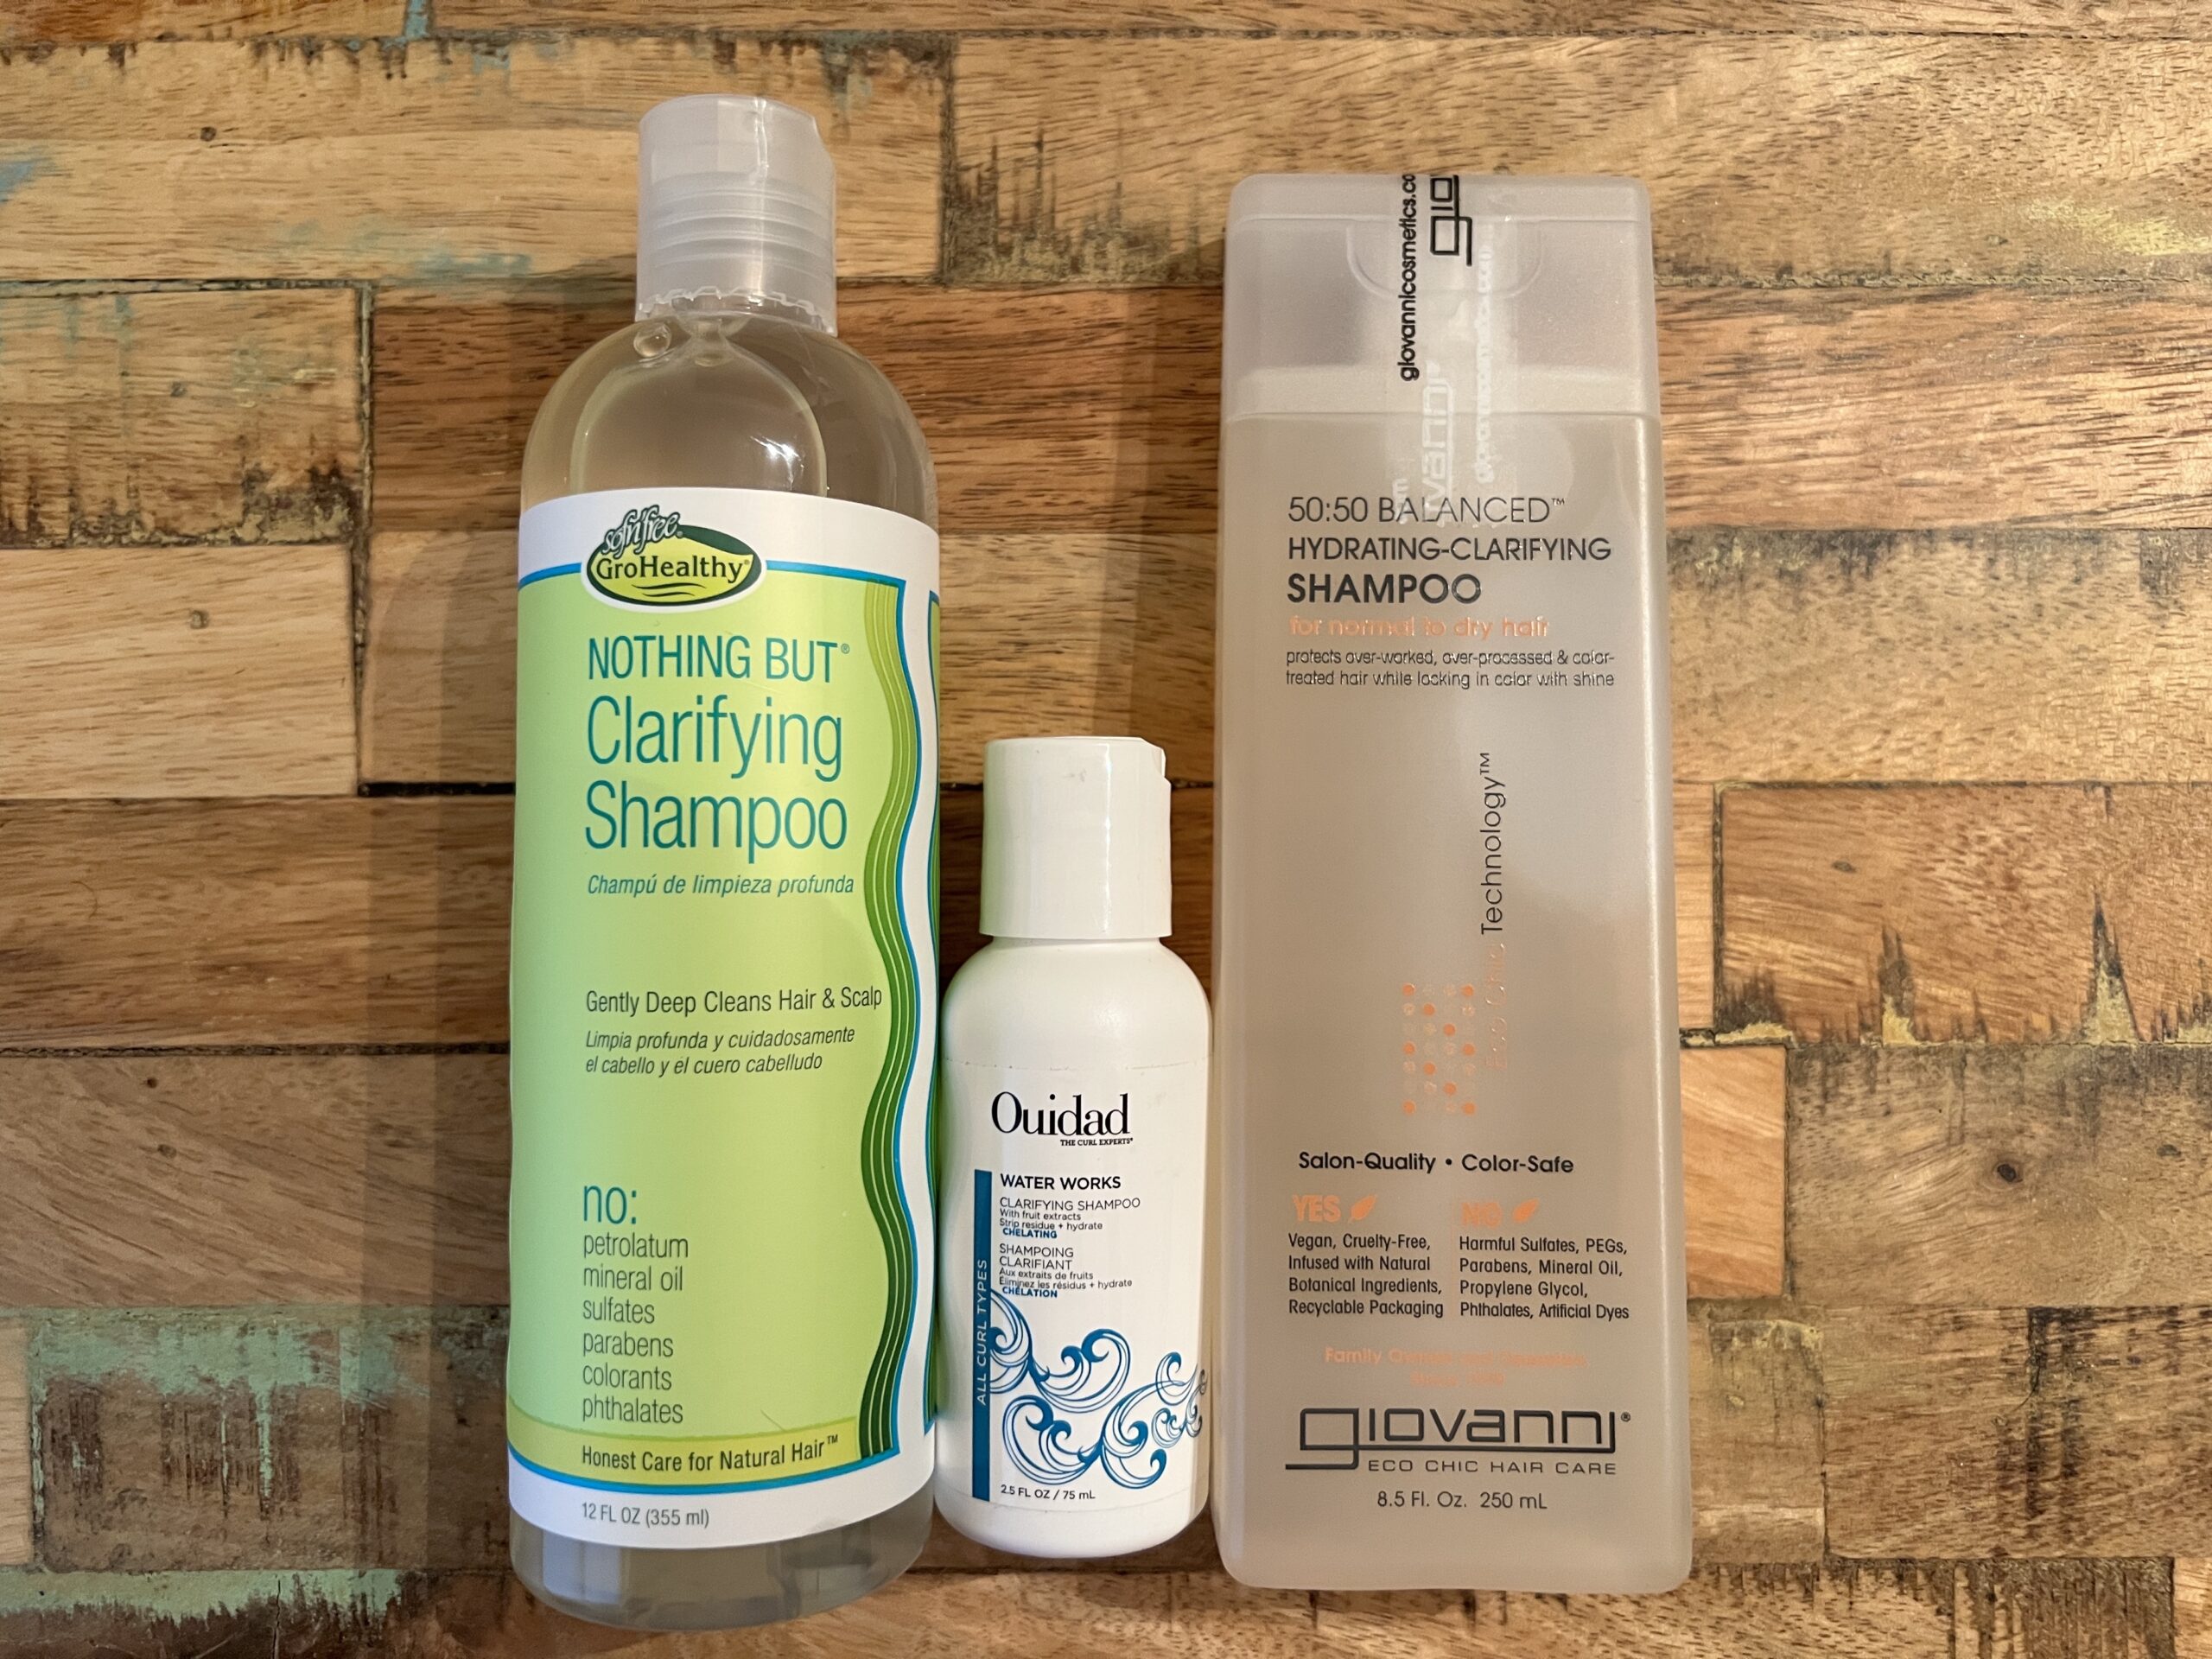 The best clarifying shampoos are Nothing But Clarifying Shampoo, Quidad's Water Works Clarifying Shampoo, and Giovanni's 50:50 Balanced Hydrating-Clarifying Shampoo.